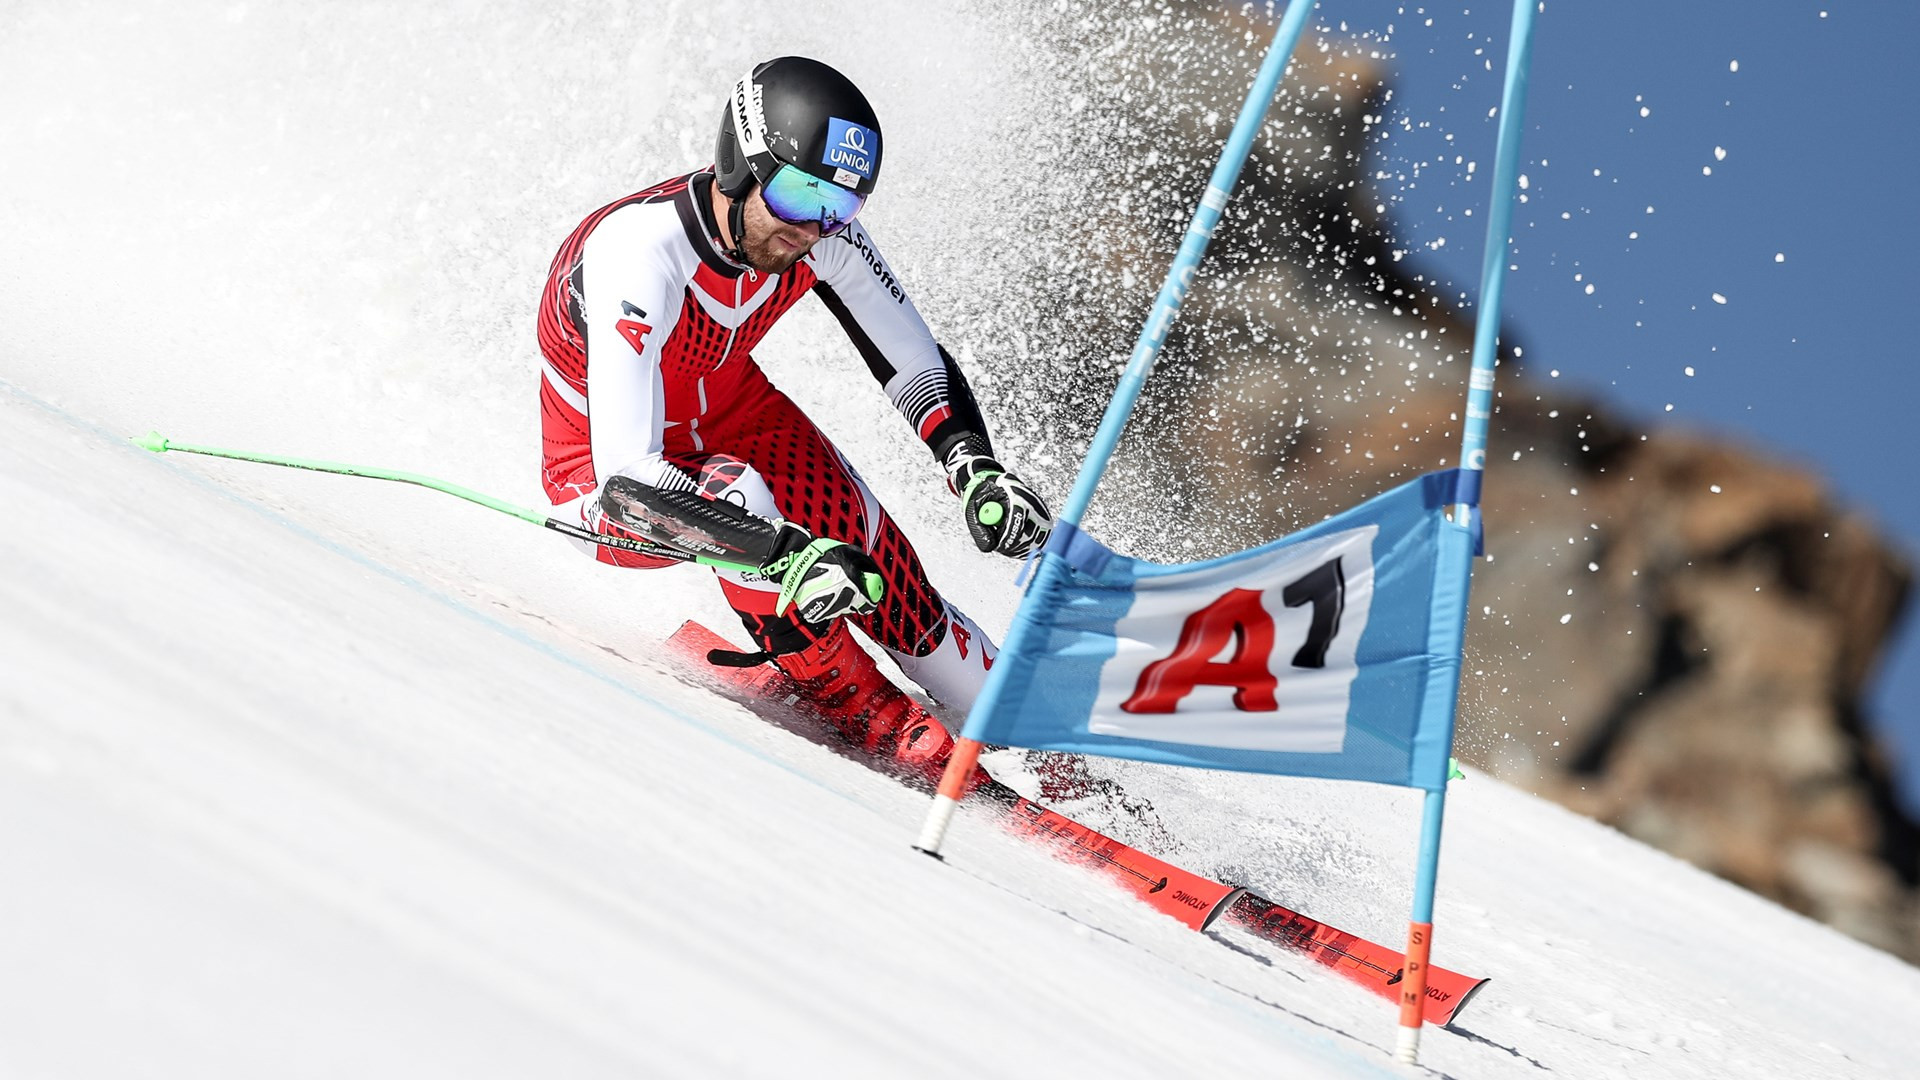 Olympic silver medallist Marco Schwarz headlined the names on the mountain ©Ski Austria